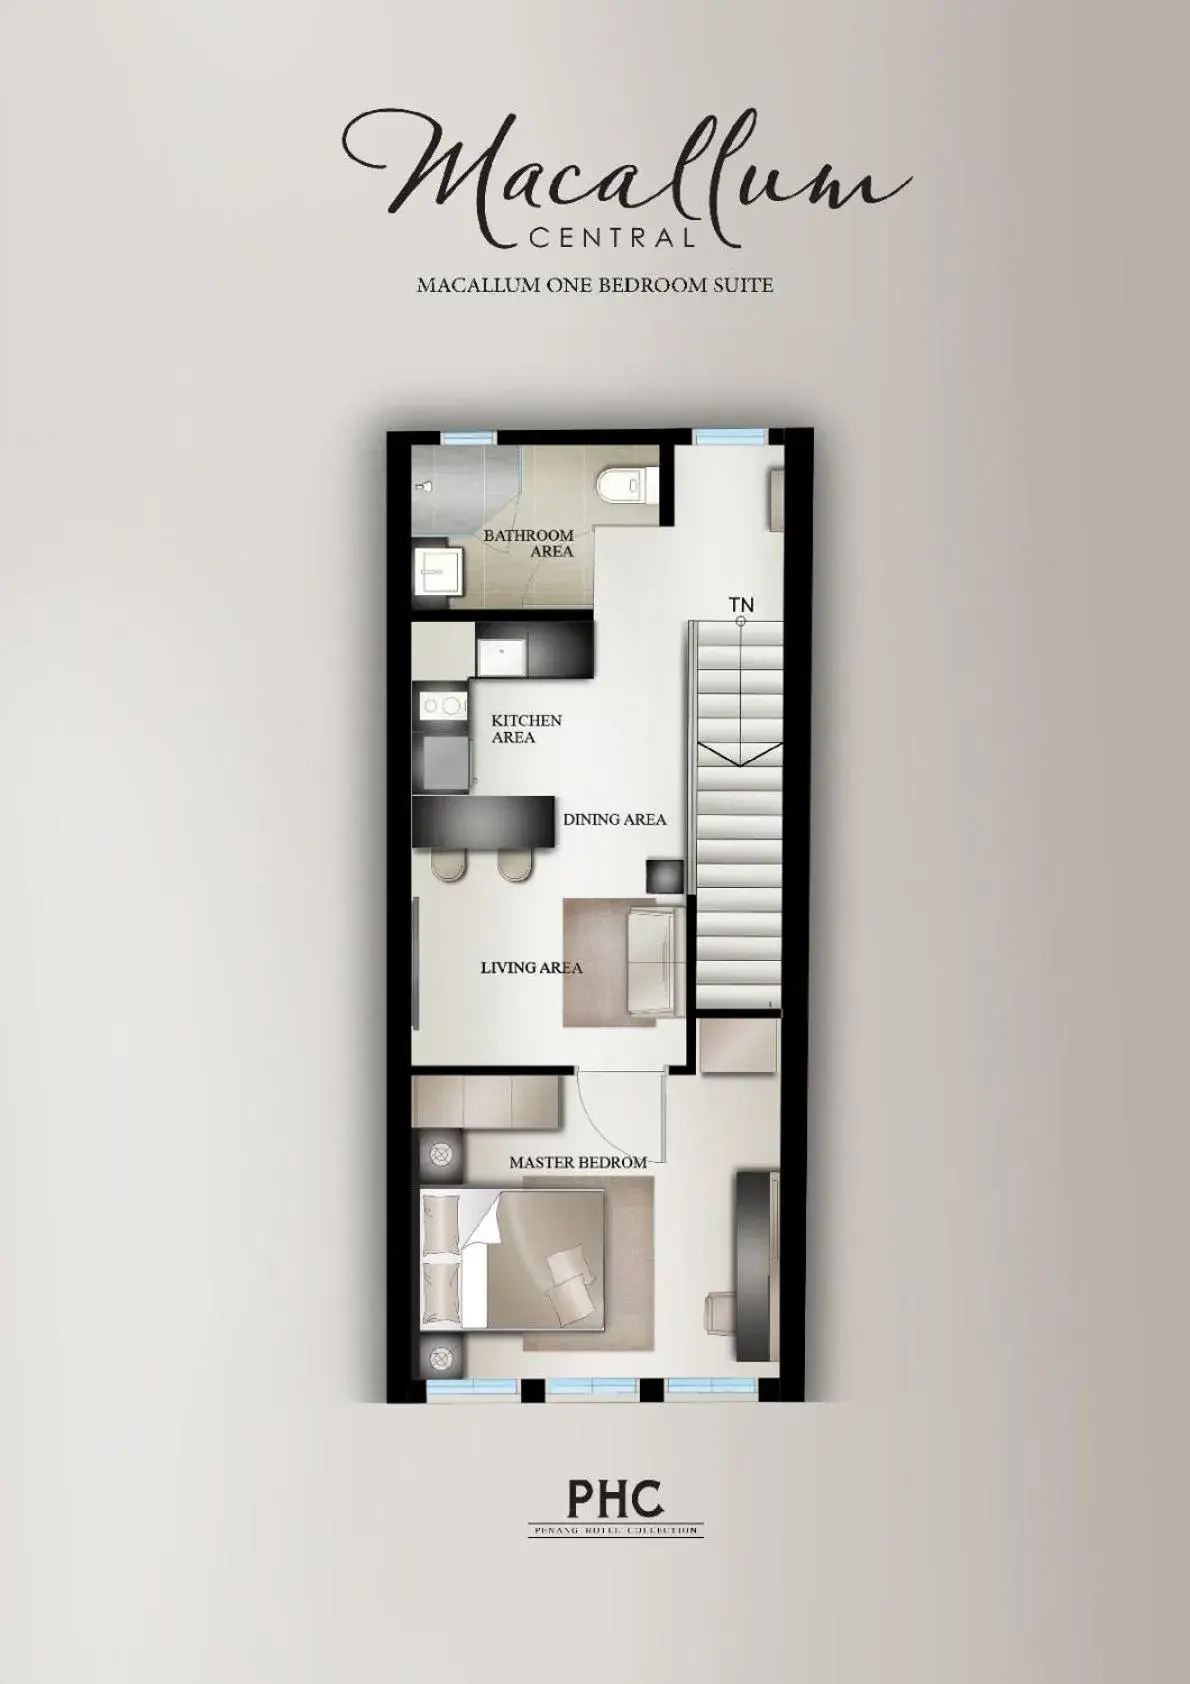 Floor Plan in Macallum Central Hotel by PHC